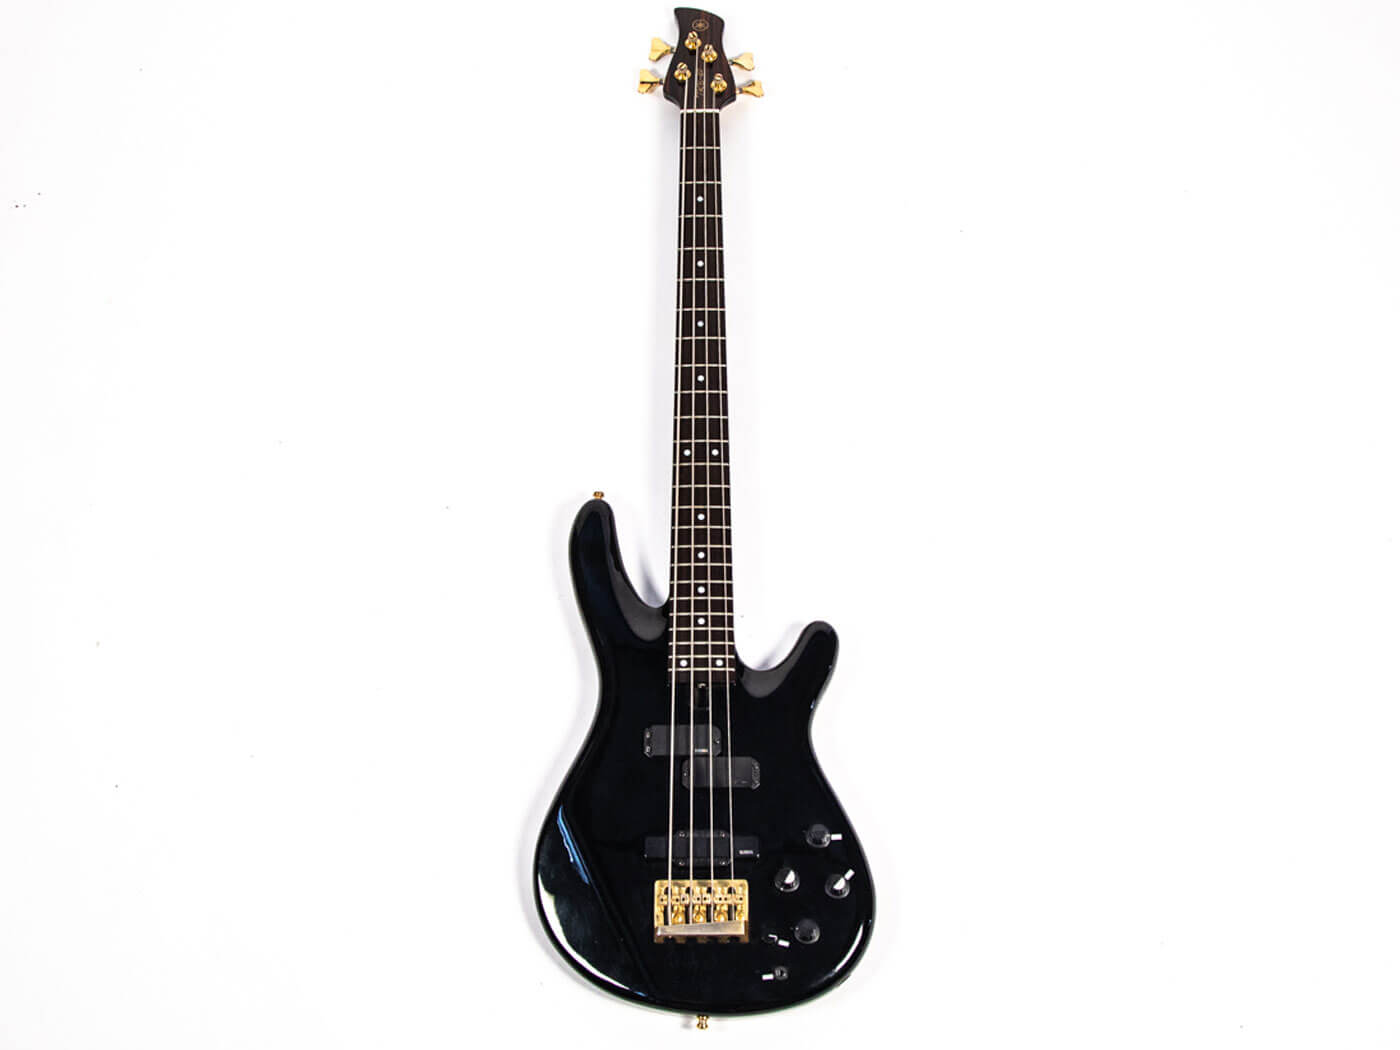 Daryl Stuermer的Yamaha Bass